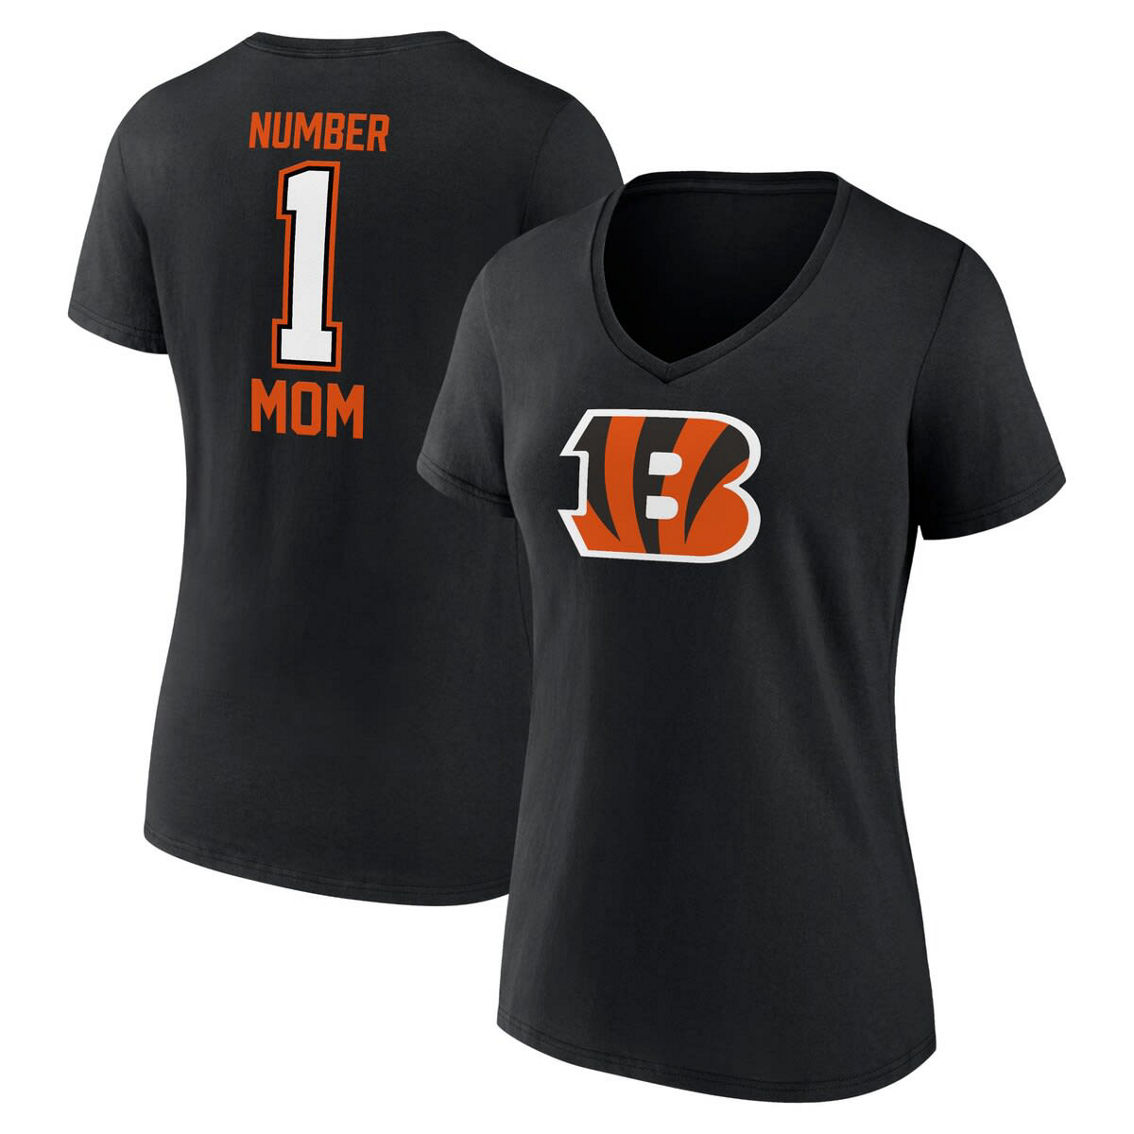 Fanatics Branded Women's Black Cincinnati Bengals Mother's Day V-Neck T-Shirt - Image 2 of 4